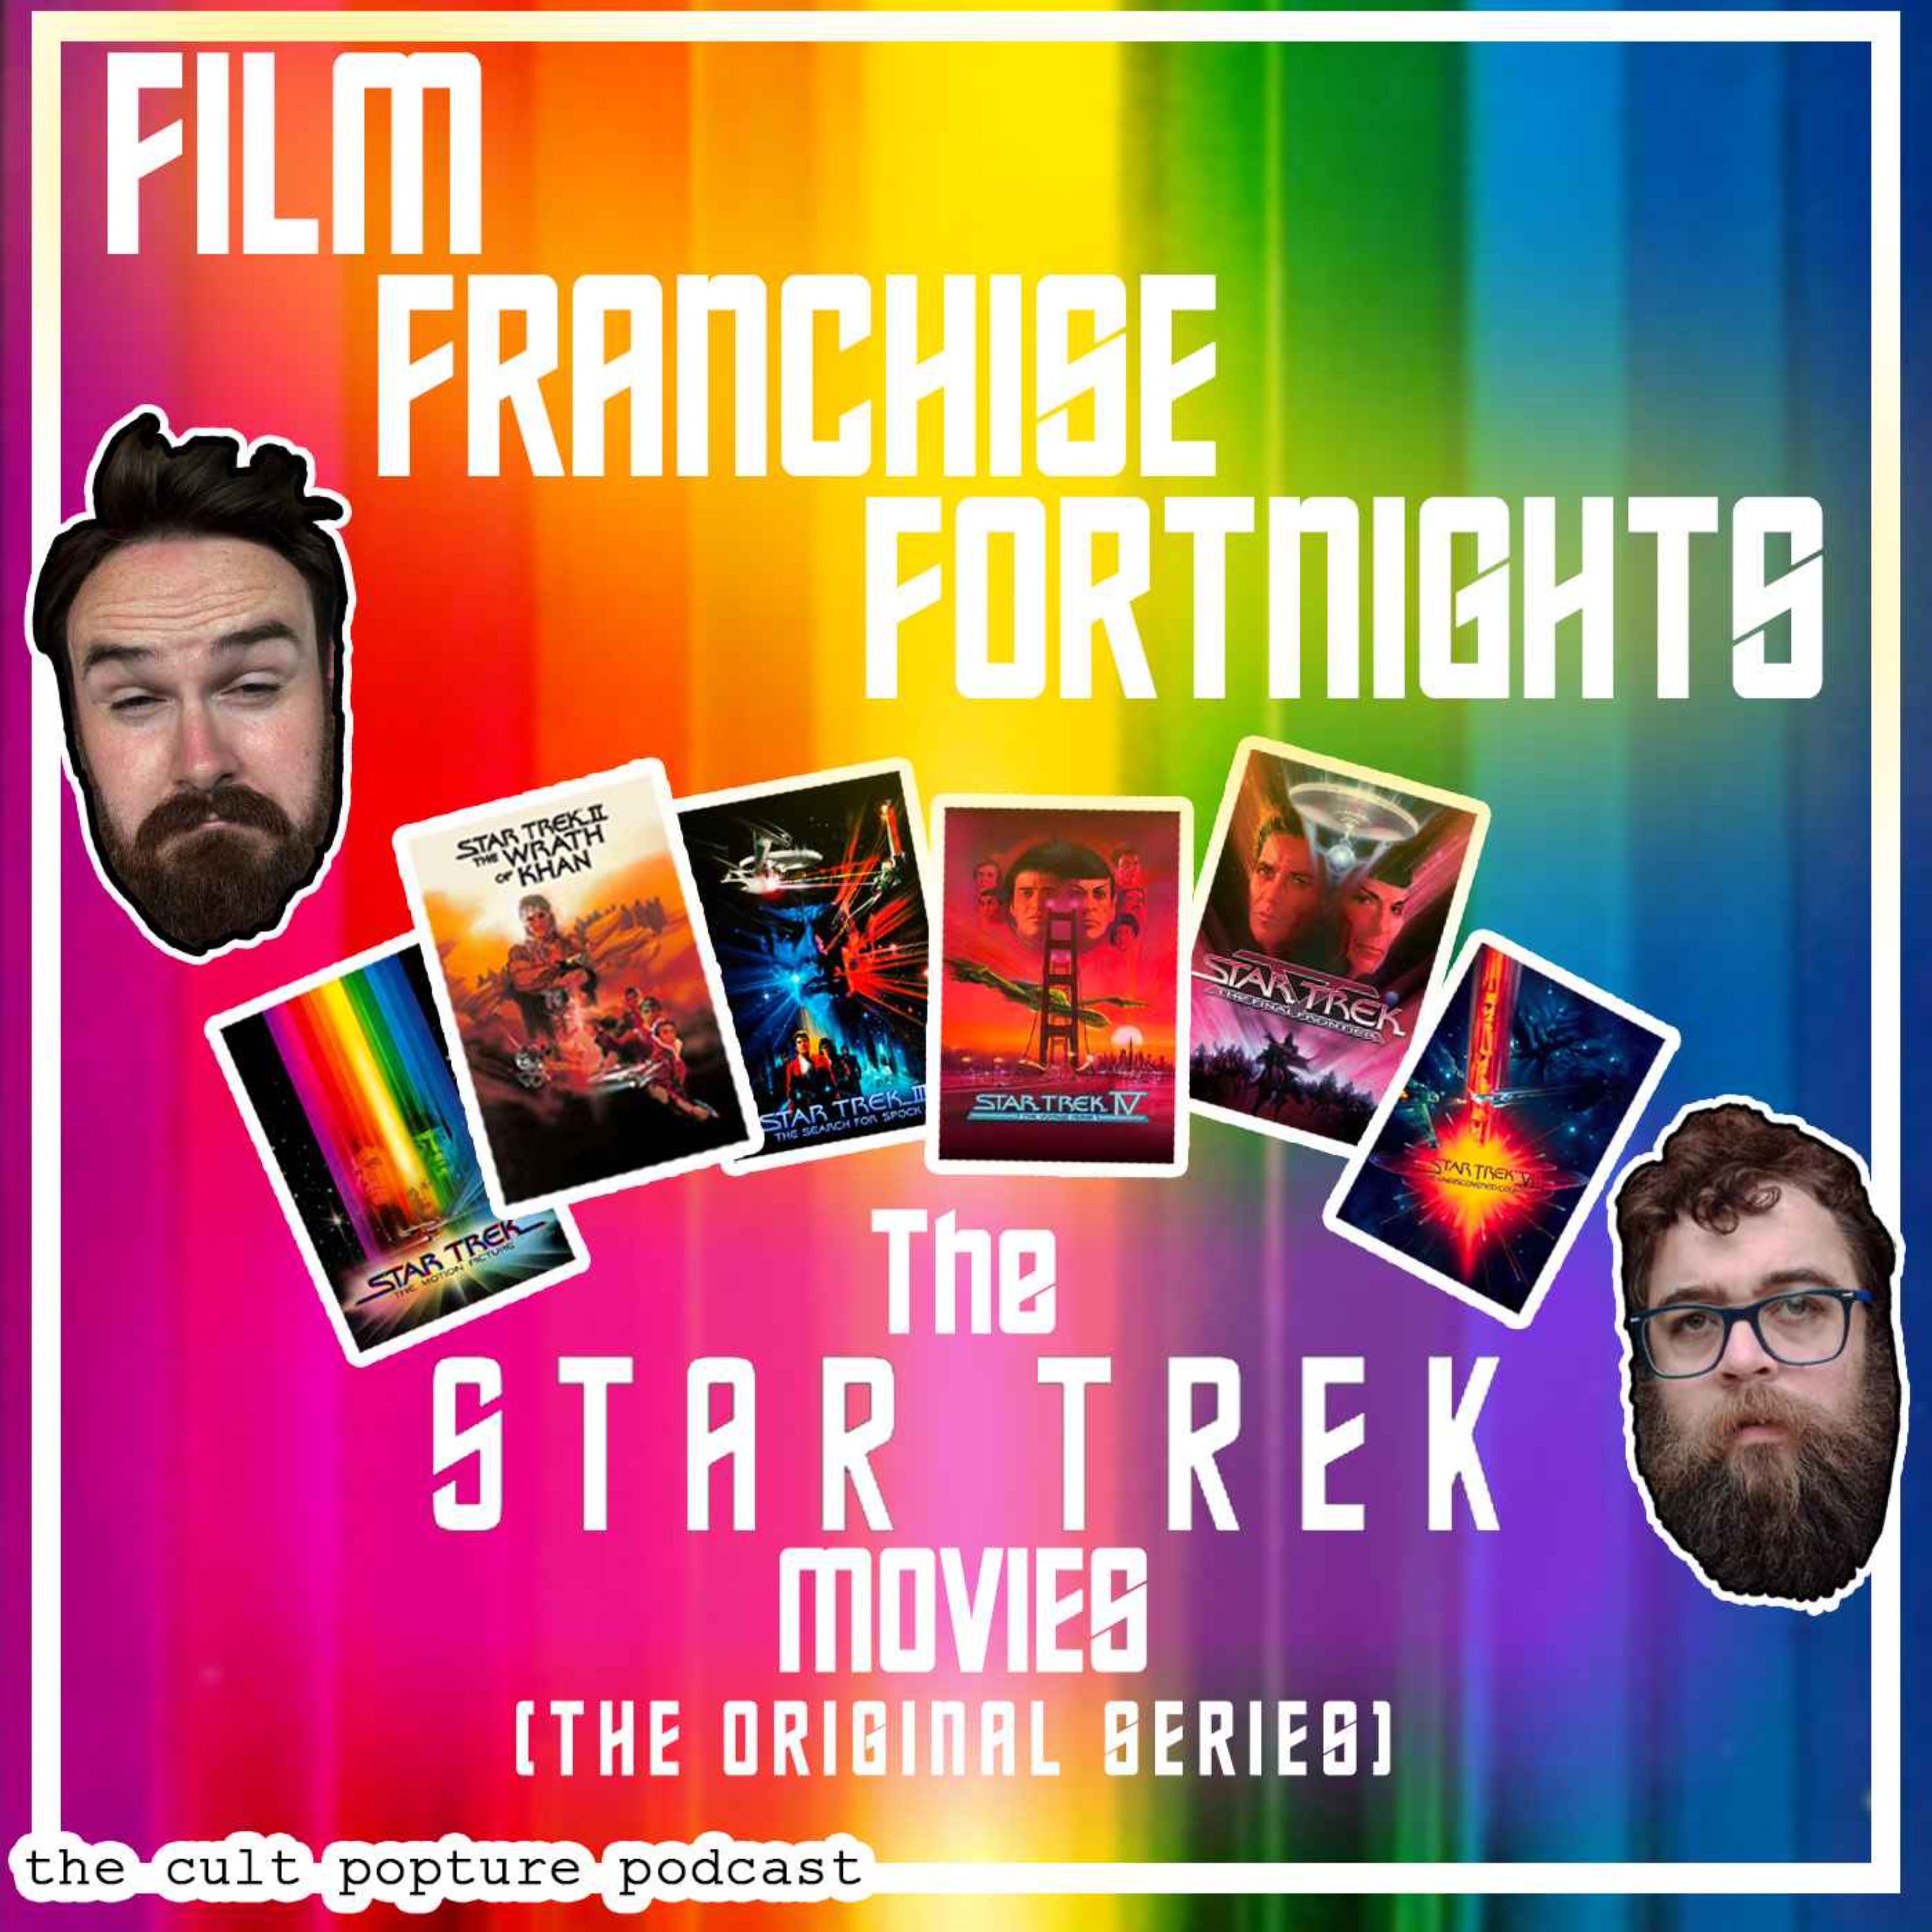 The ”Star Trek” Movies (The Original Series) | Film Franchise Fortnights